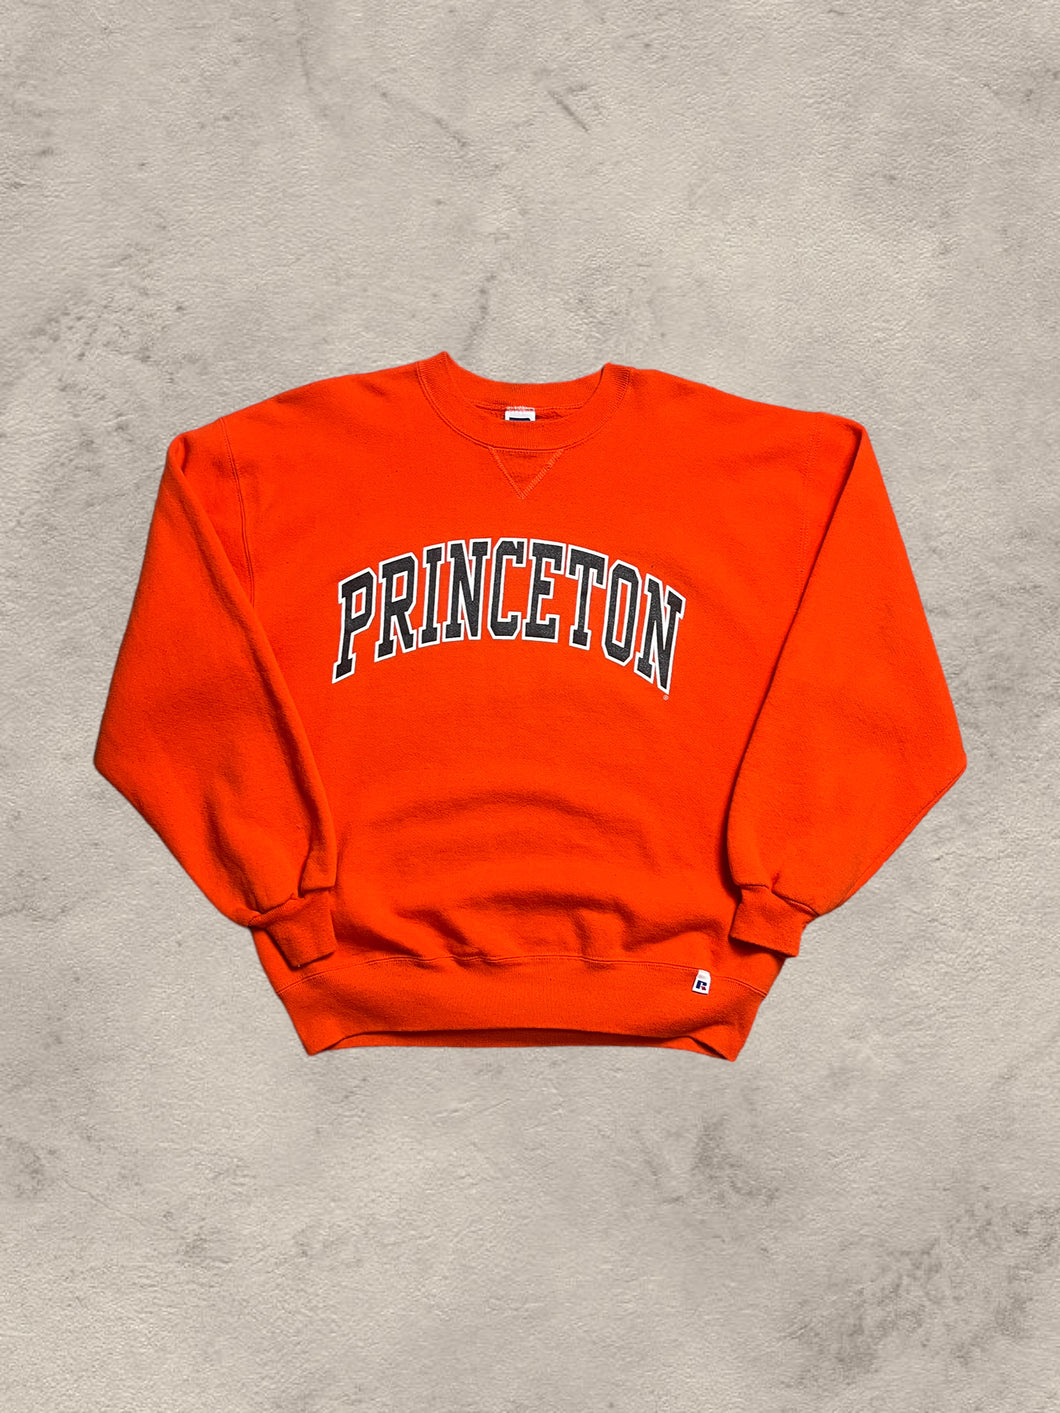 1990’s Russell Princeton Sweatshirt - Large